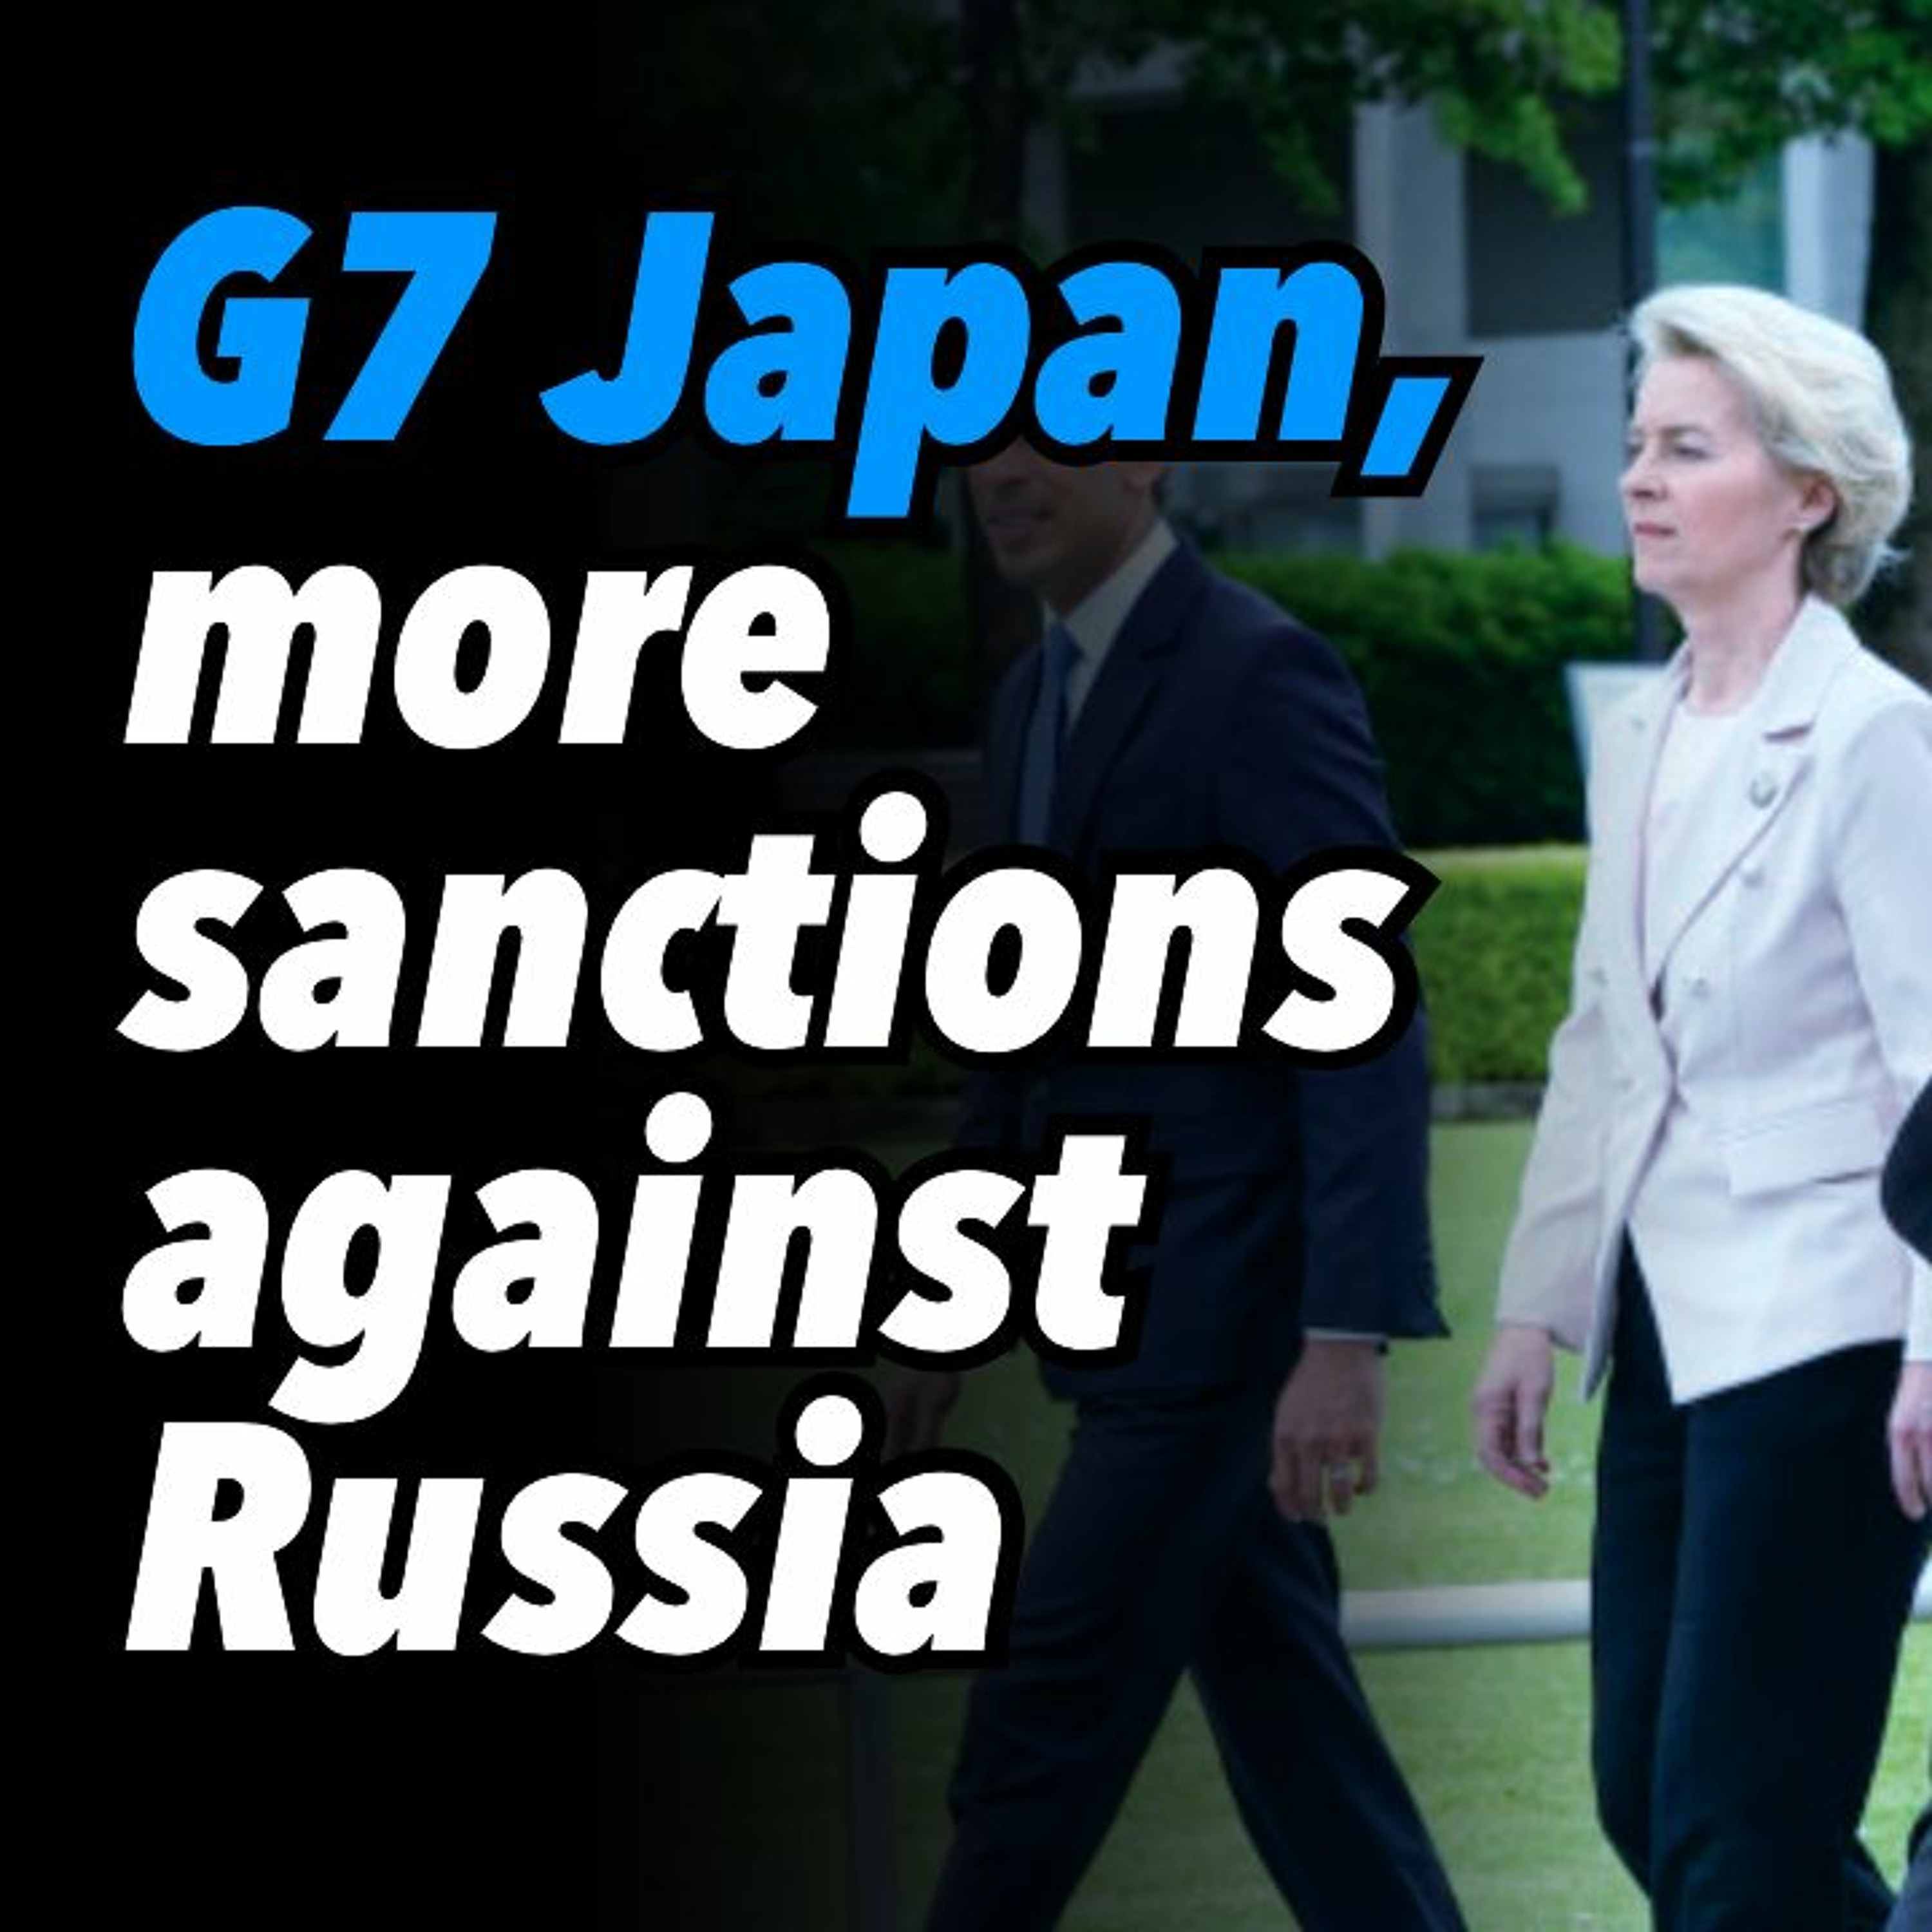 G7 Japan, more sanctions against Russia